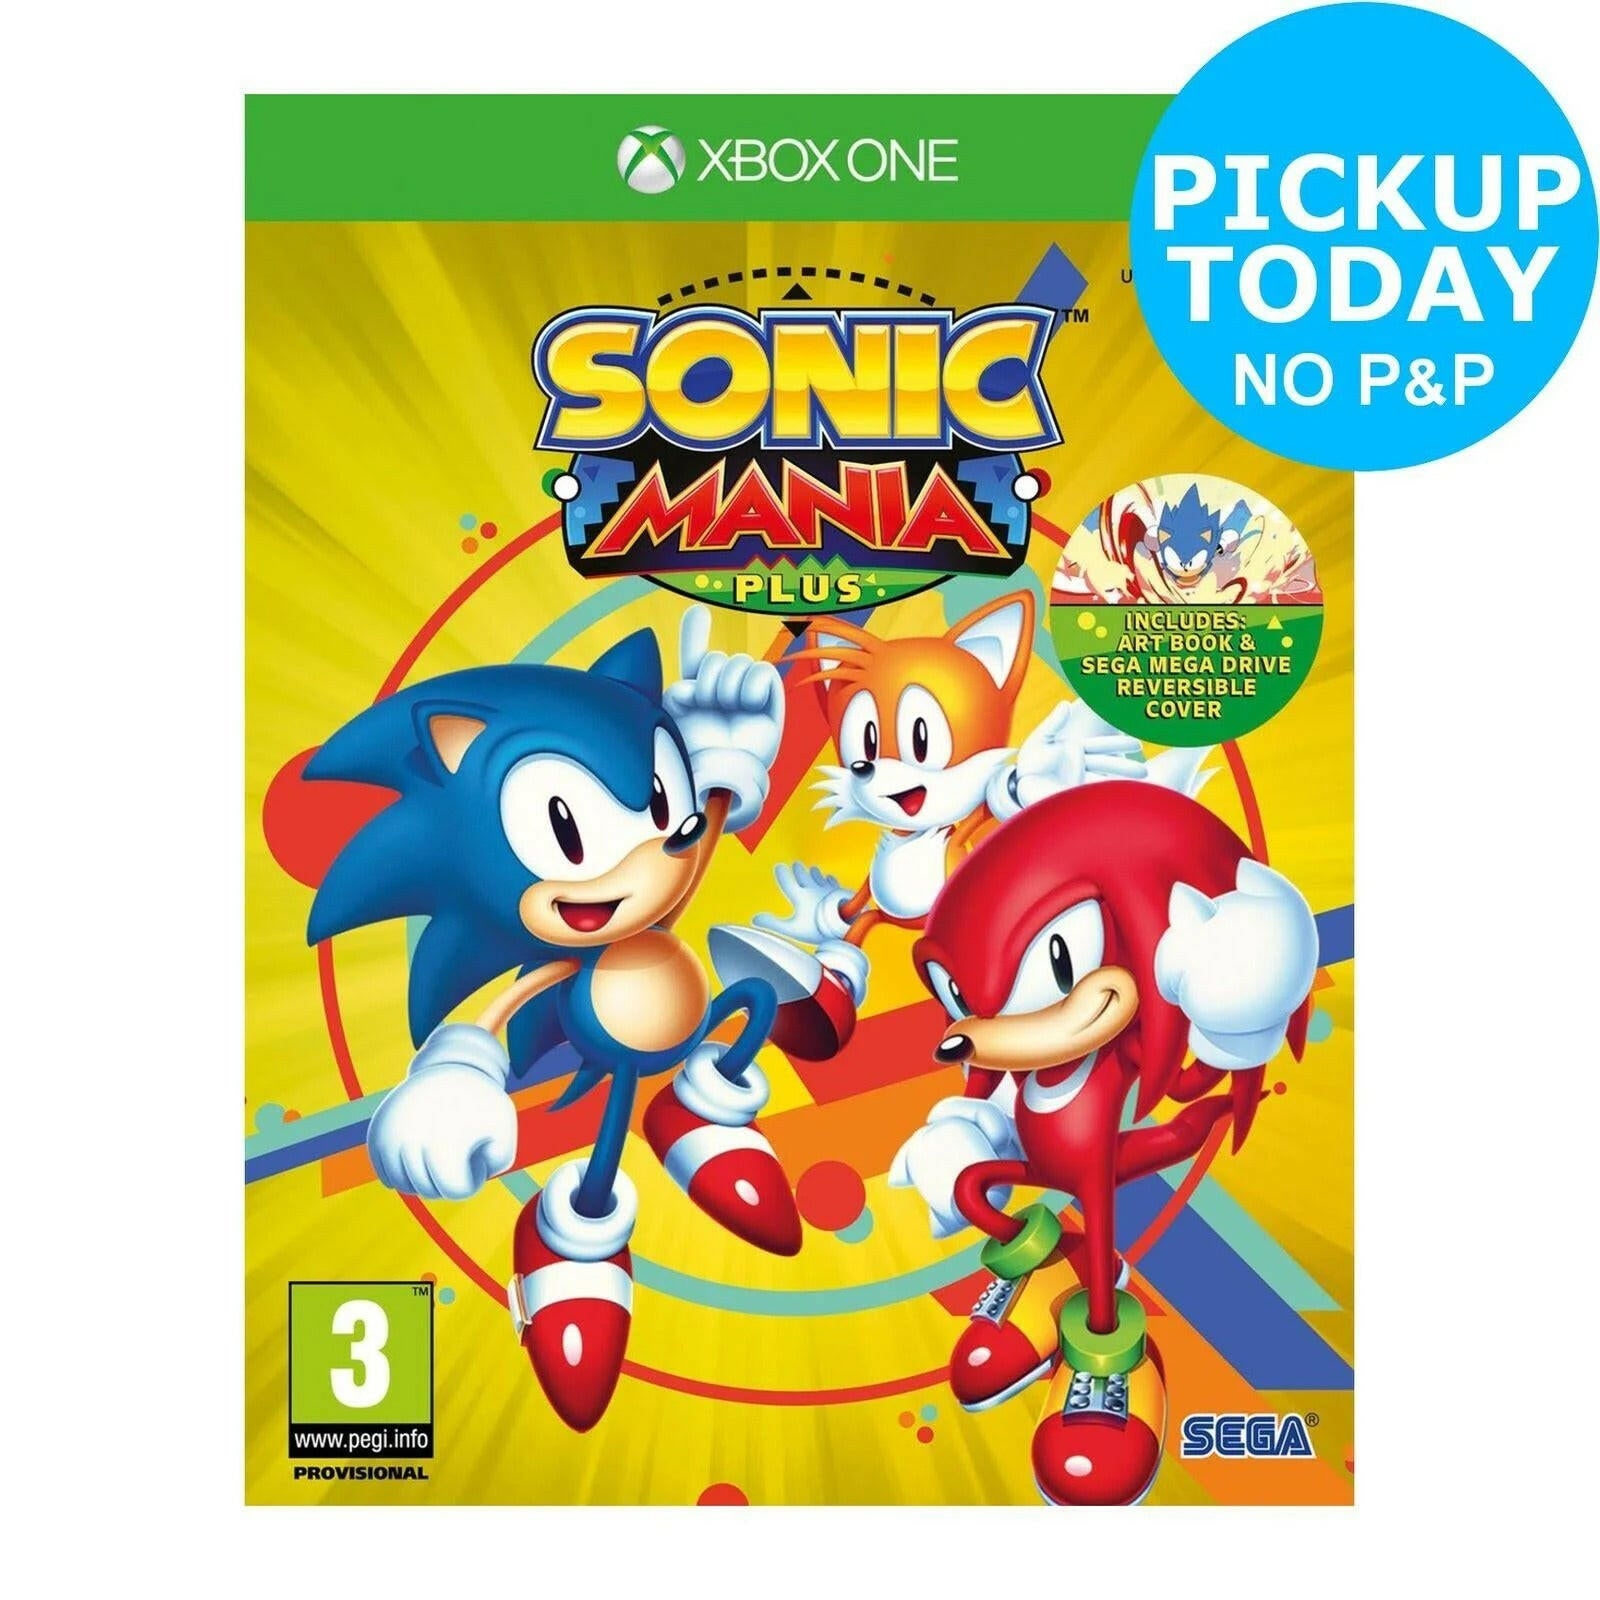 Sonic Mania Xbox One (UK)